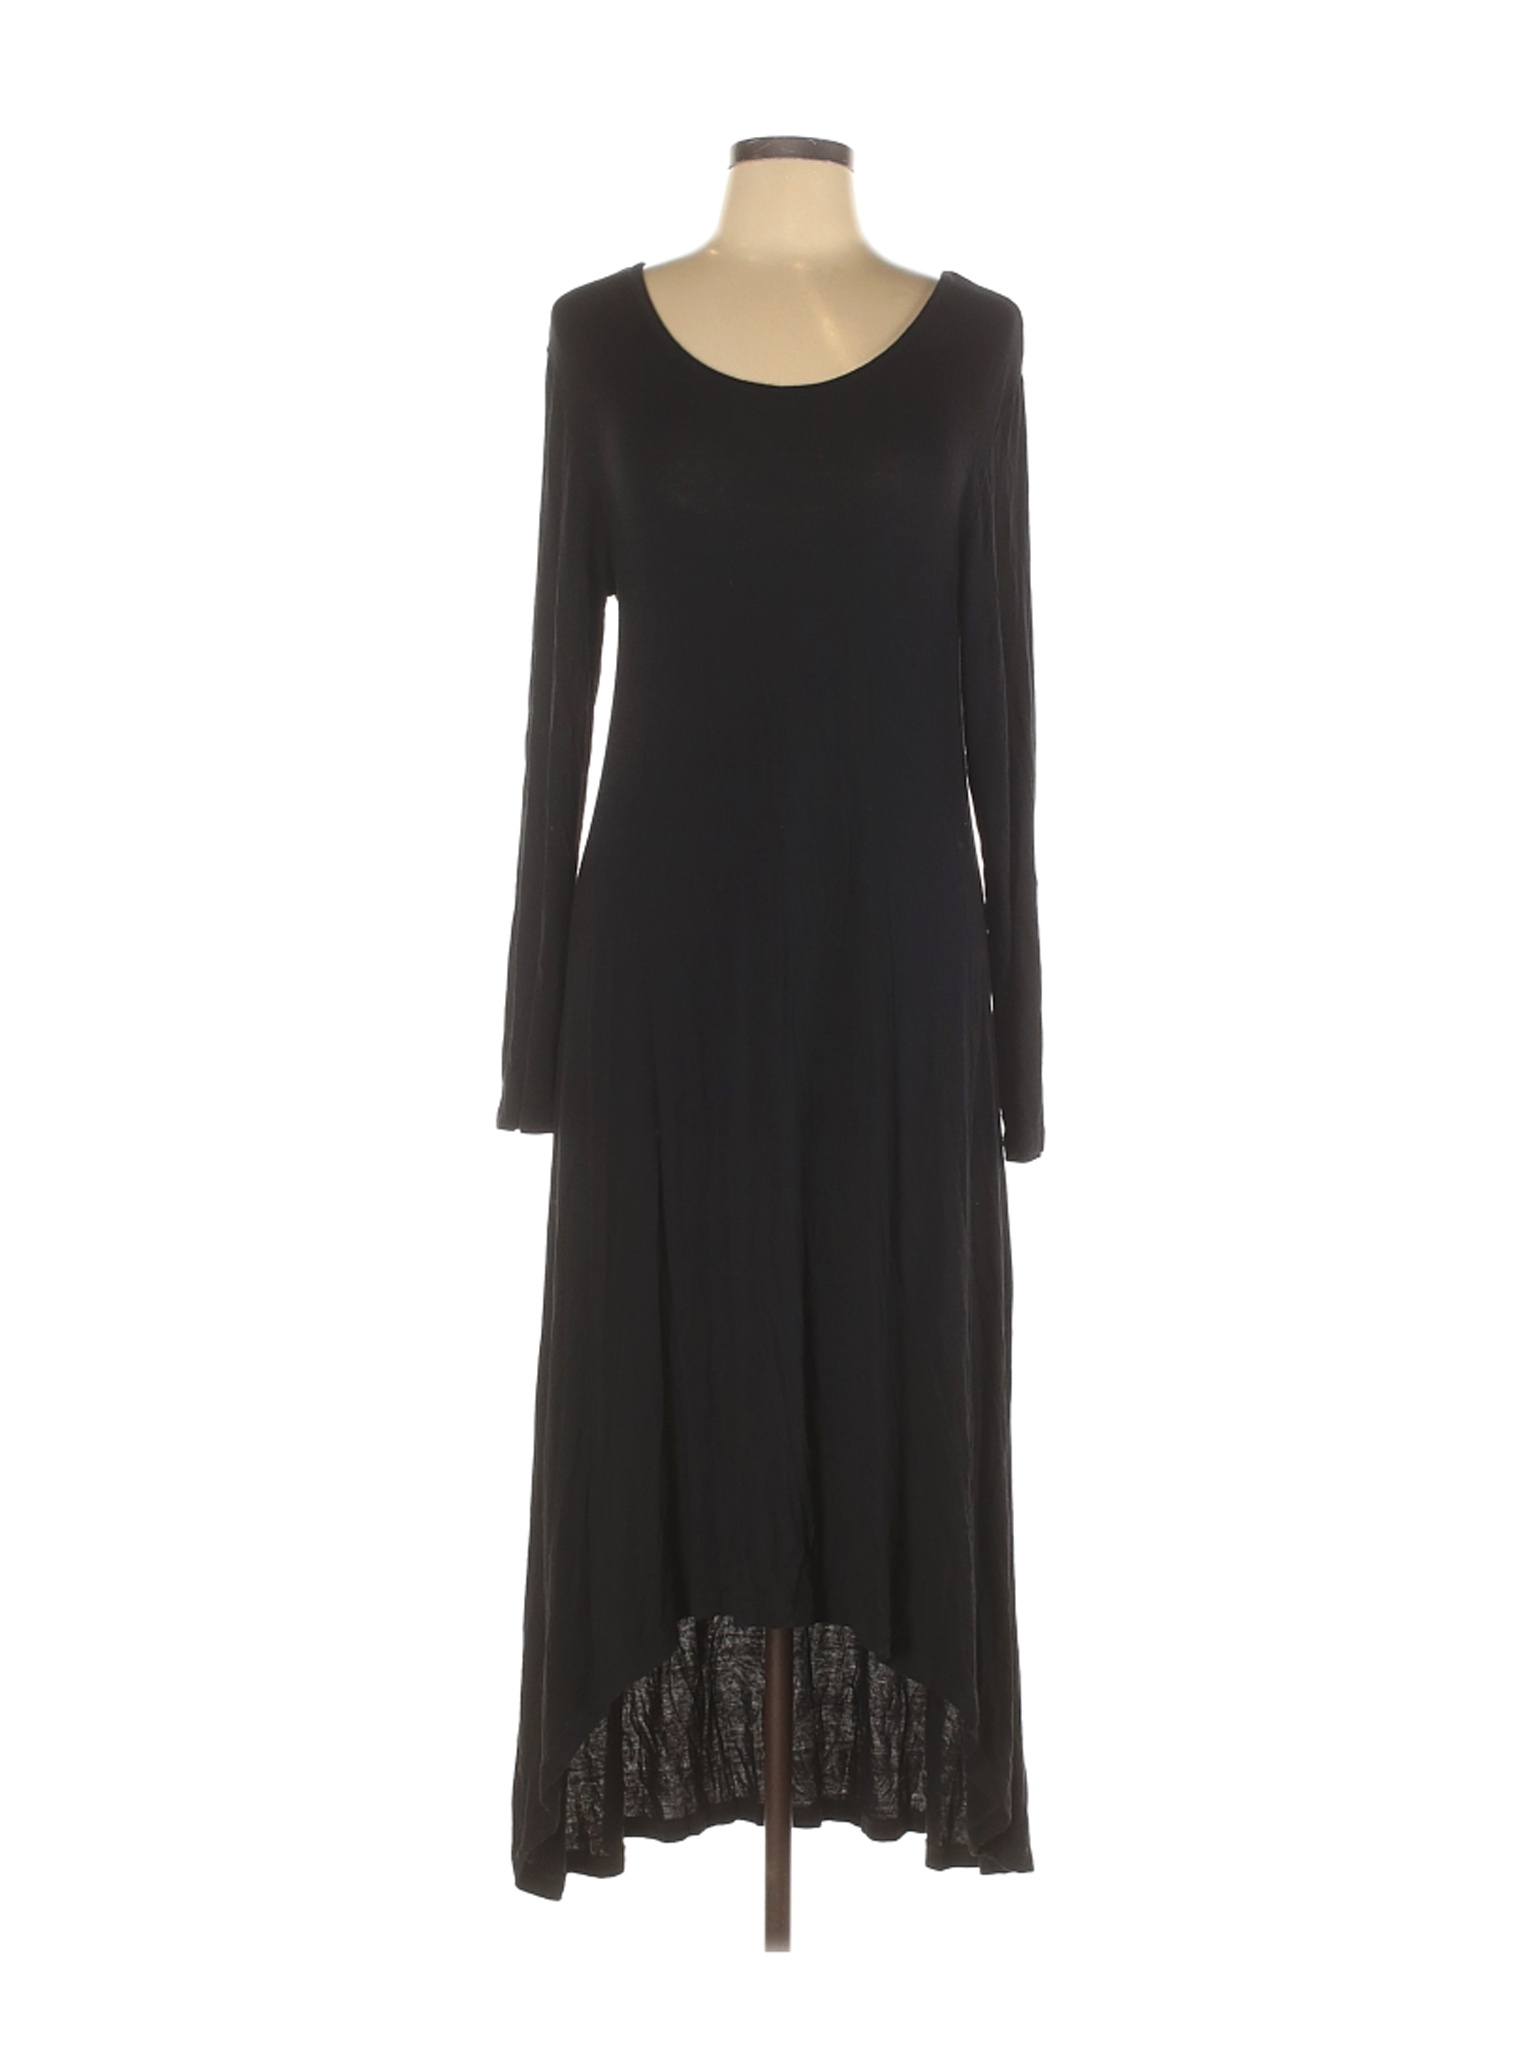 Charlie Paige Women Black Casual Dress L | eBay